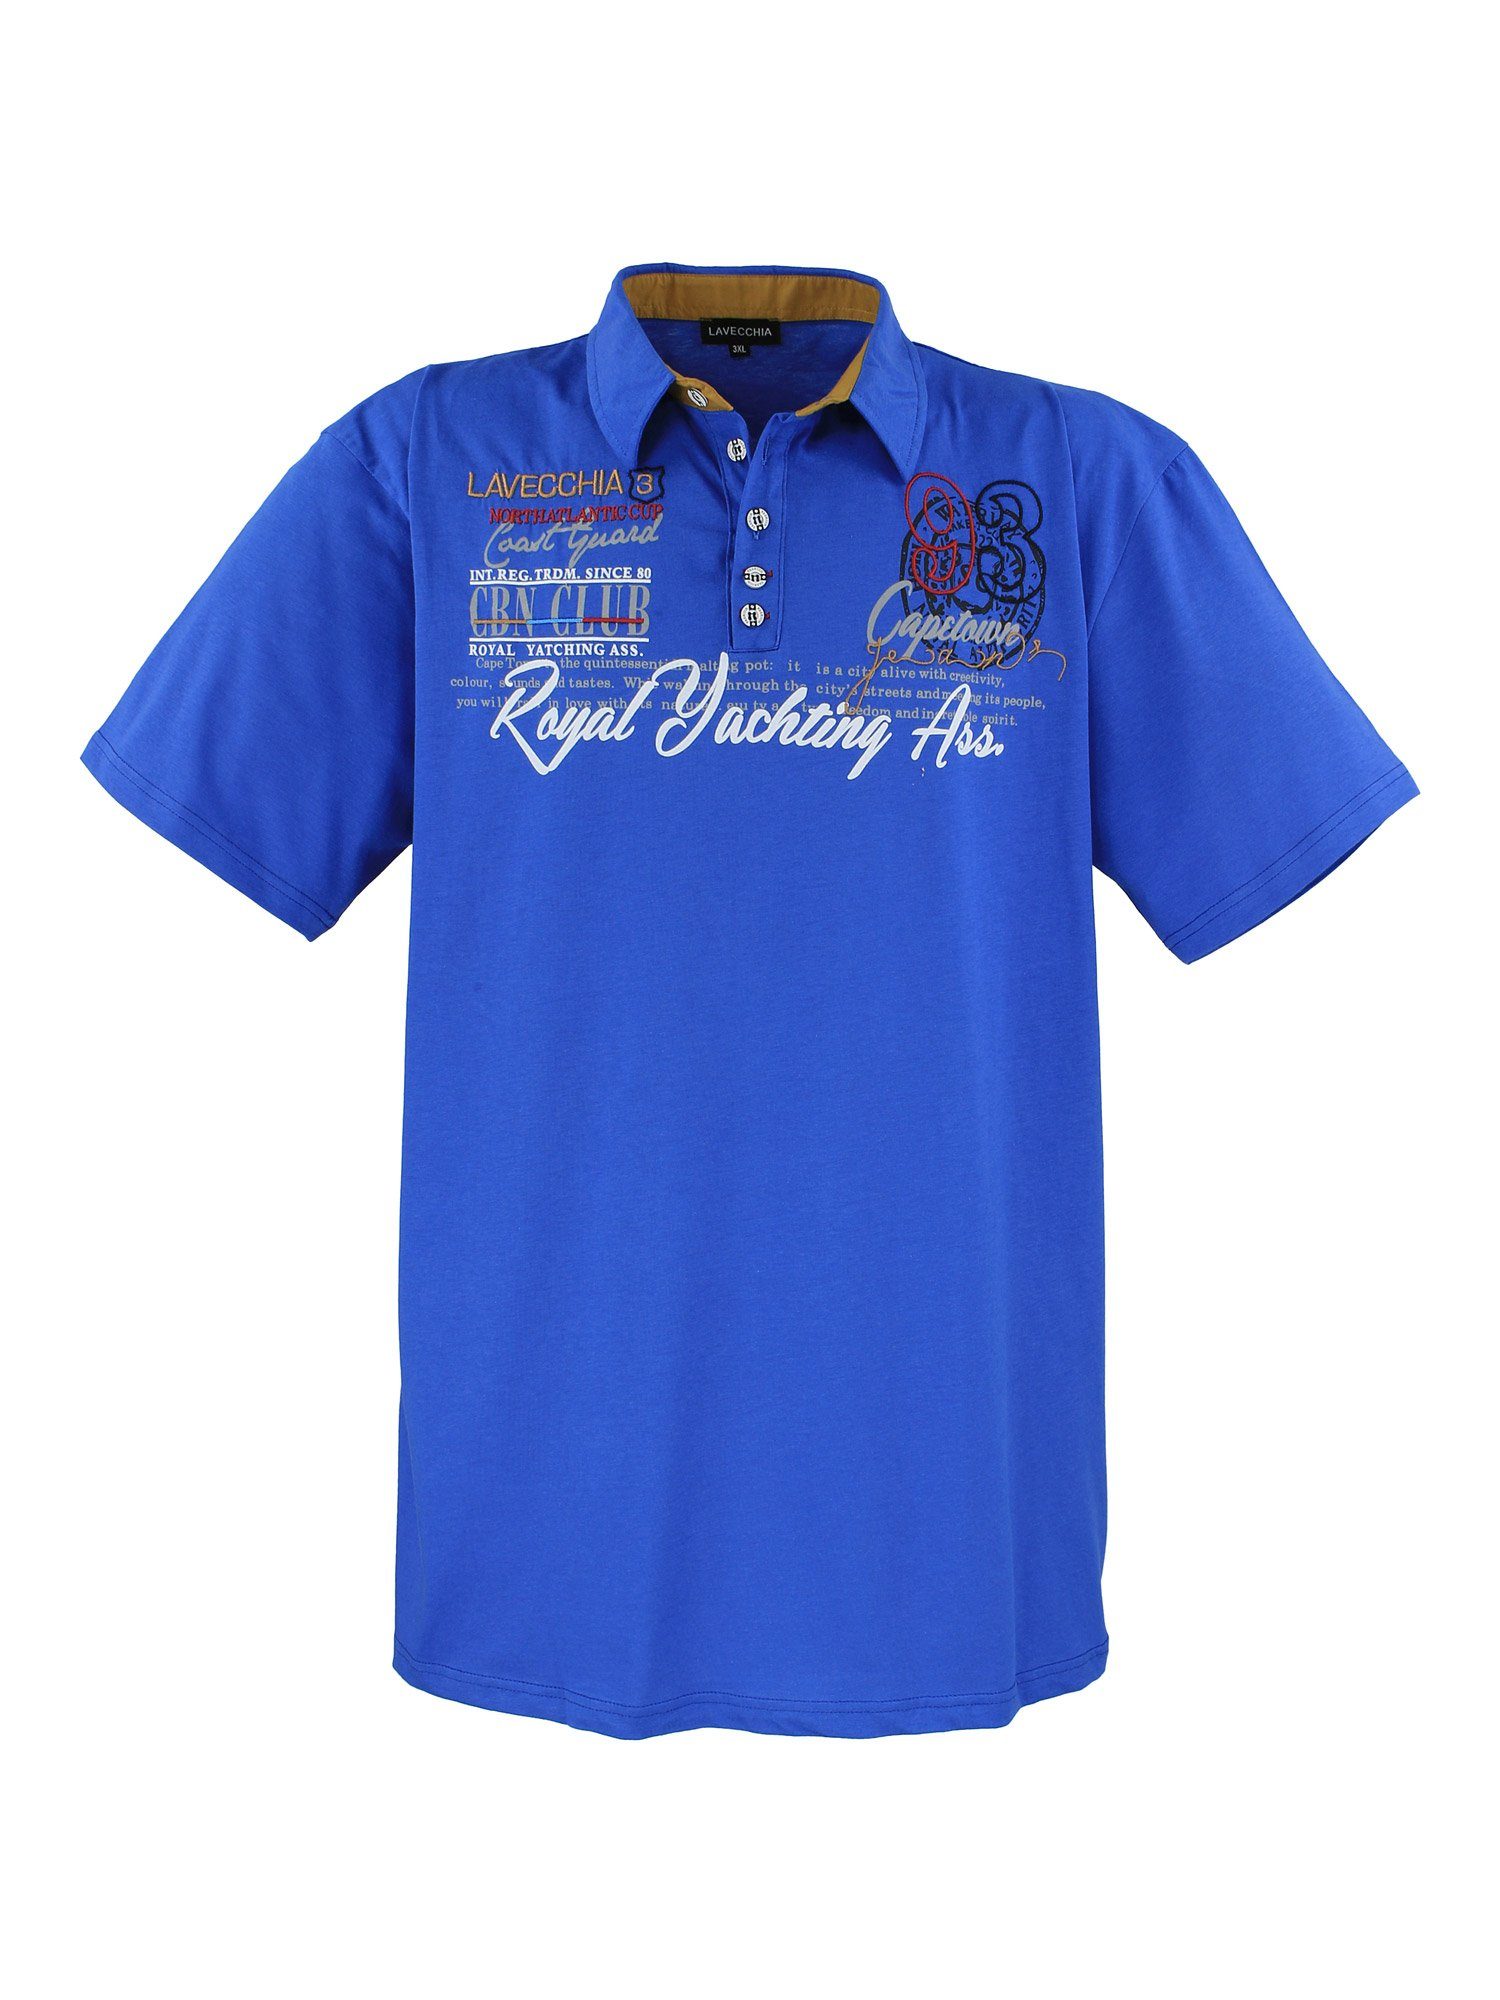 Lavecchia Poloshirt Übergrößen Herren Polo Shirt LV-4688 Herren Polo Shirt royalblau